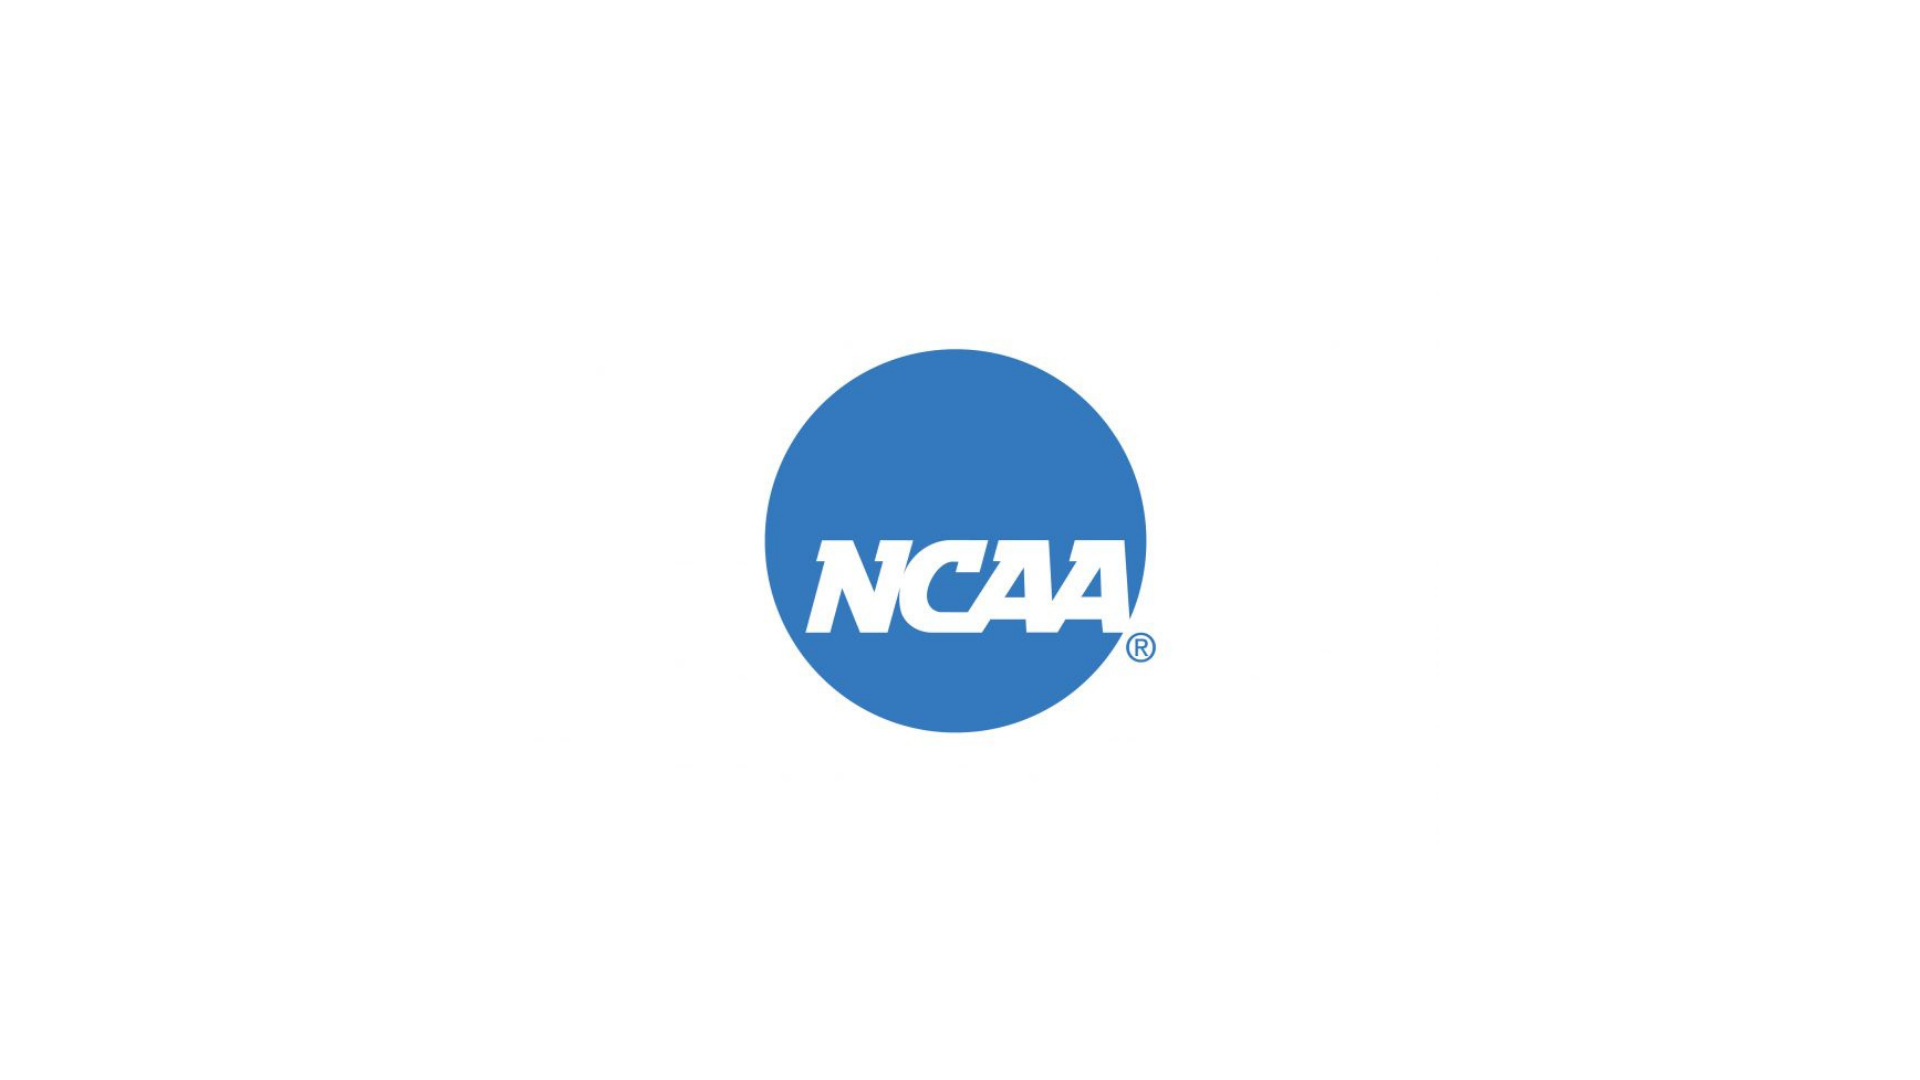 NCAA logo.png